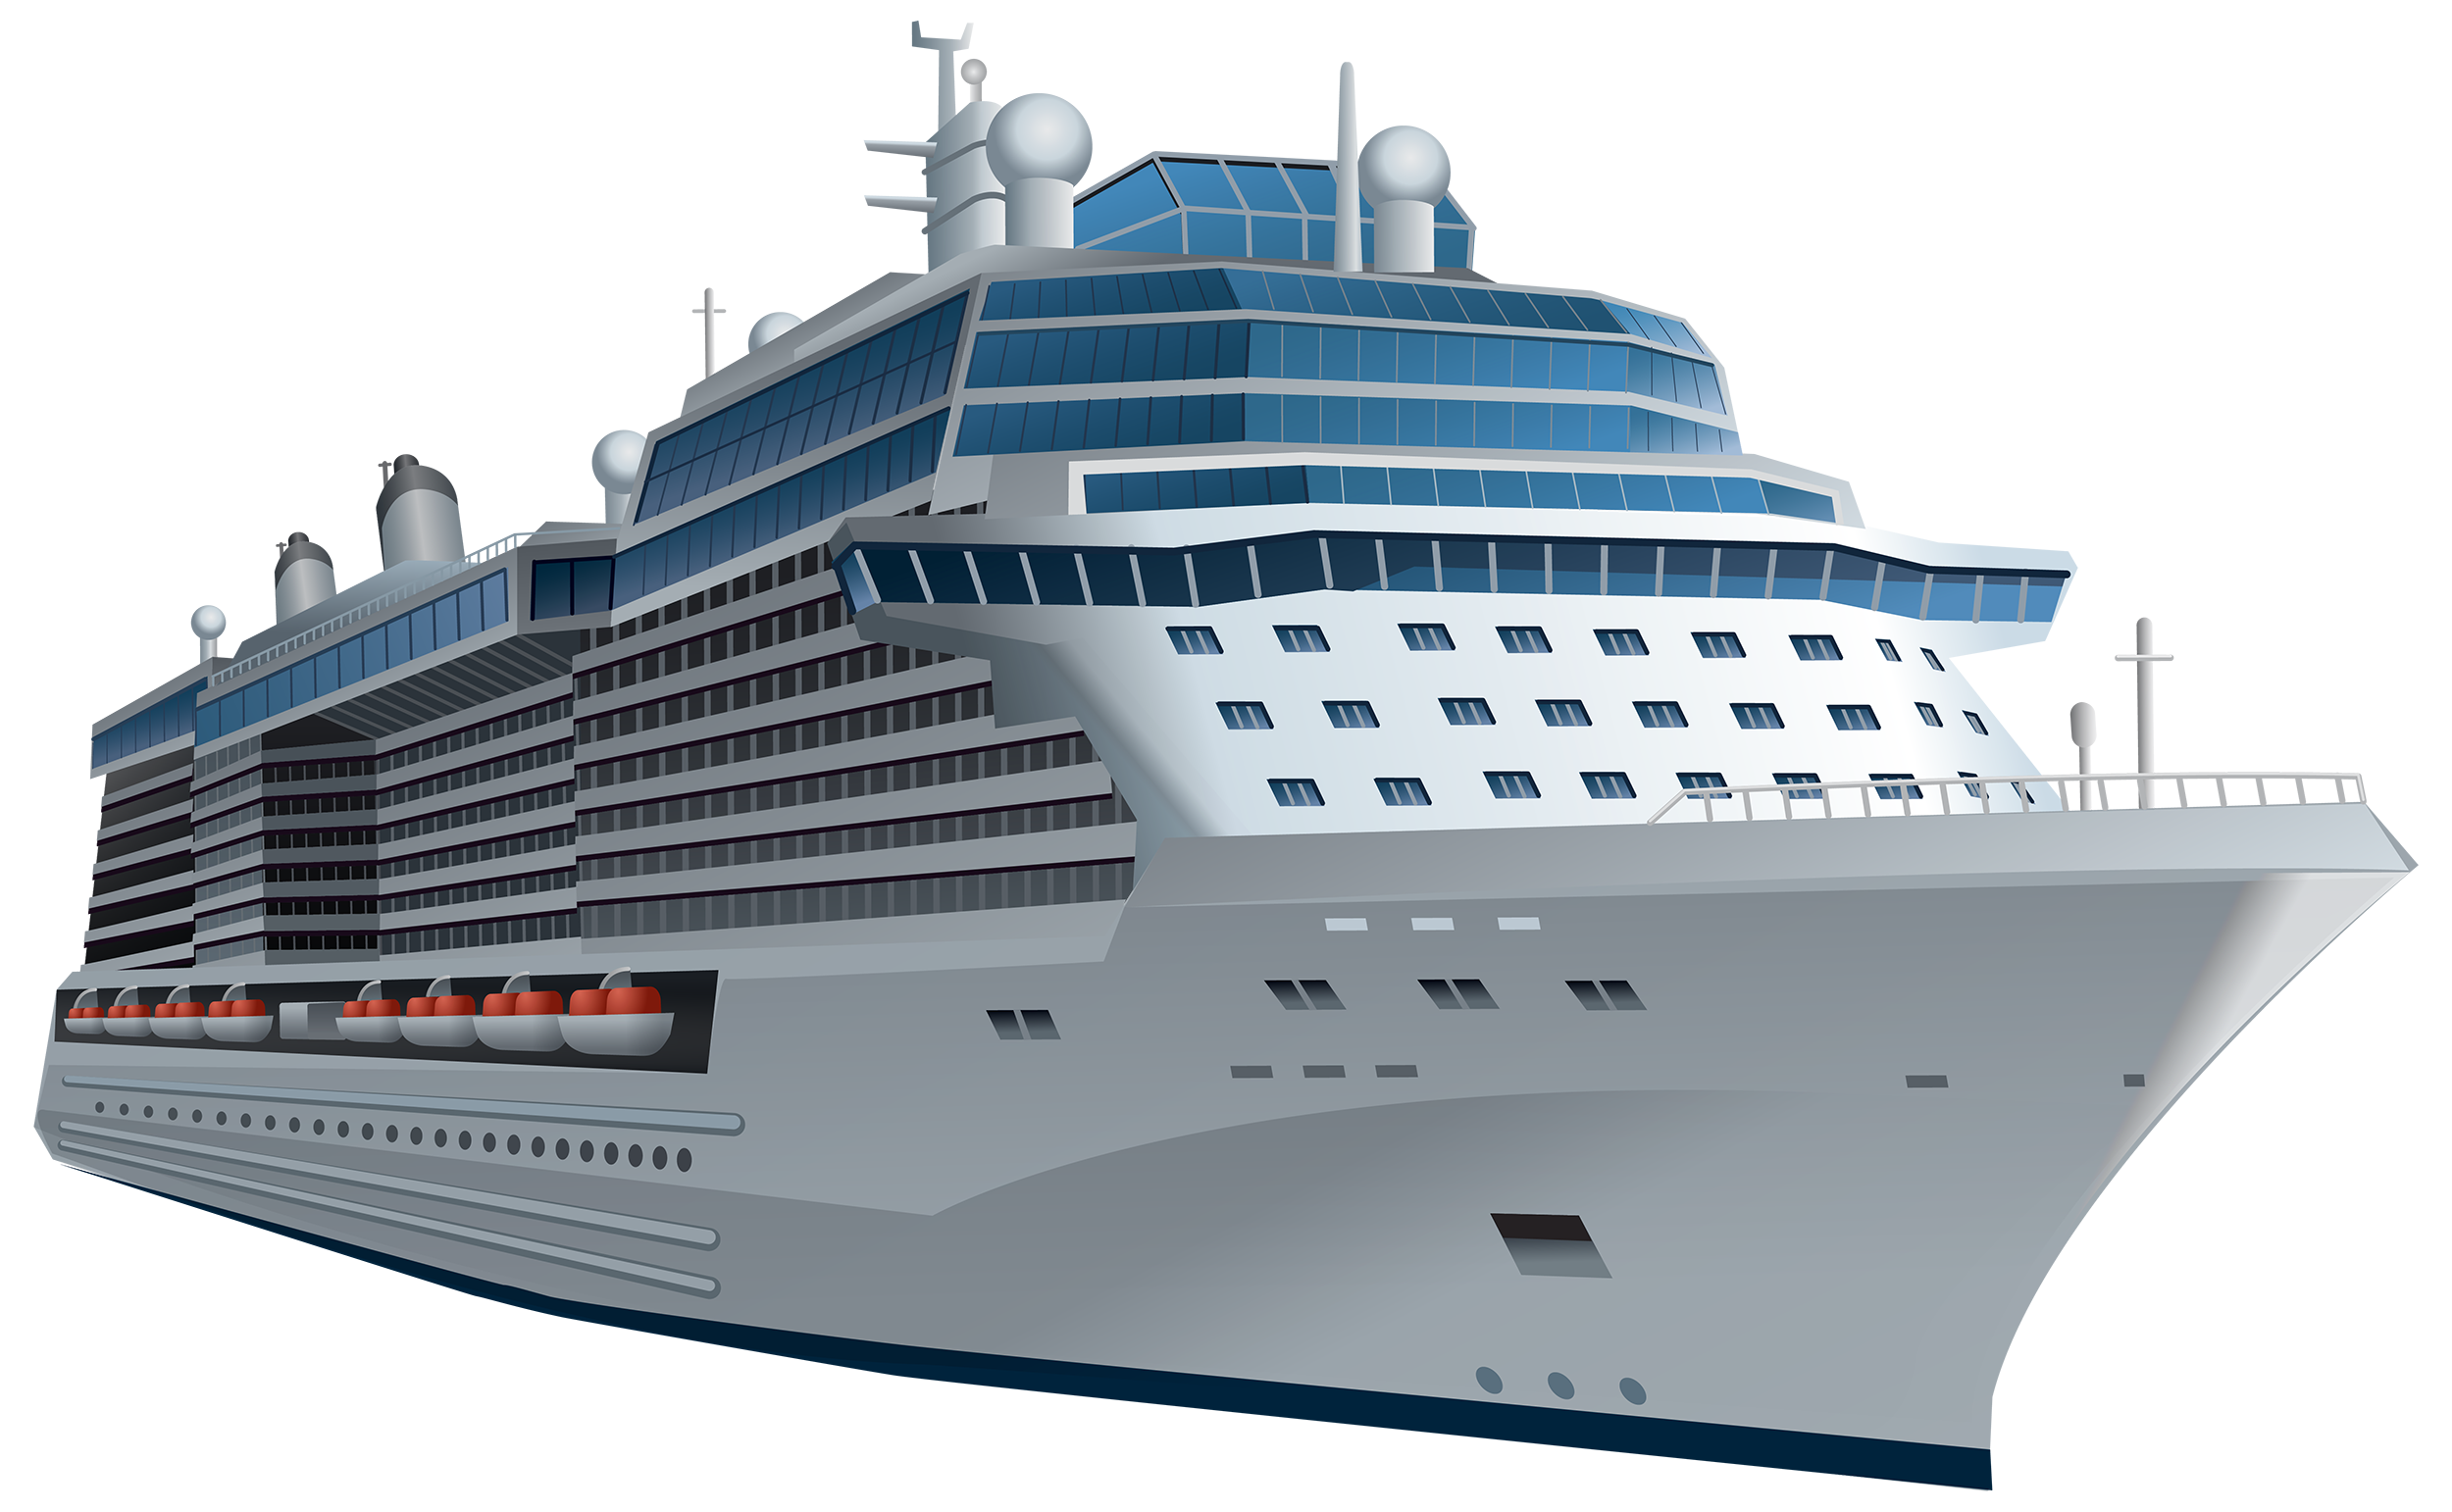 Ship Travel Cruise Tourism Tr